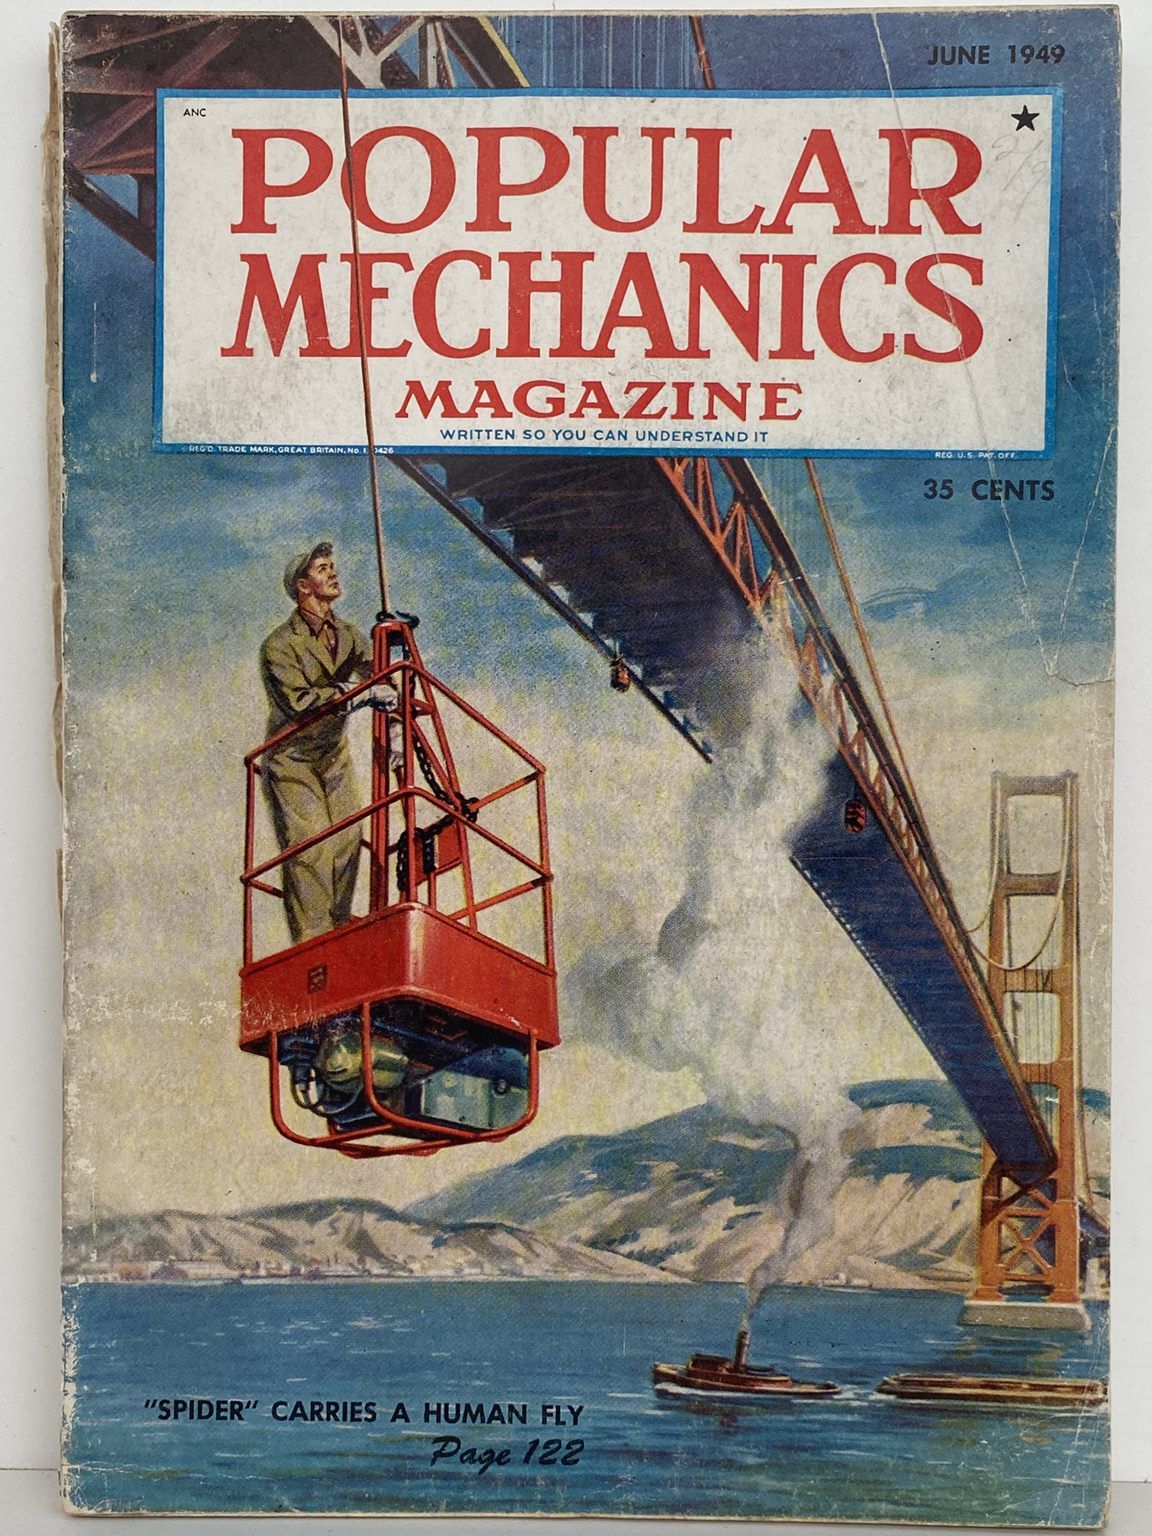 VINTAGE MAGAZINE: Popular Mechanics - Vol. 91, No. 6 - June 1949